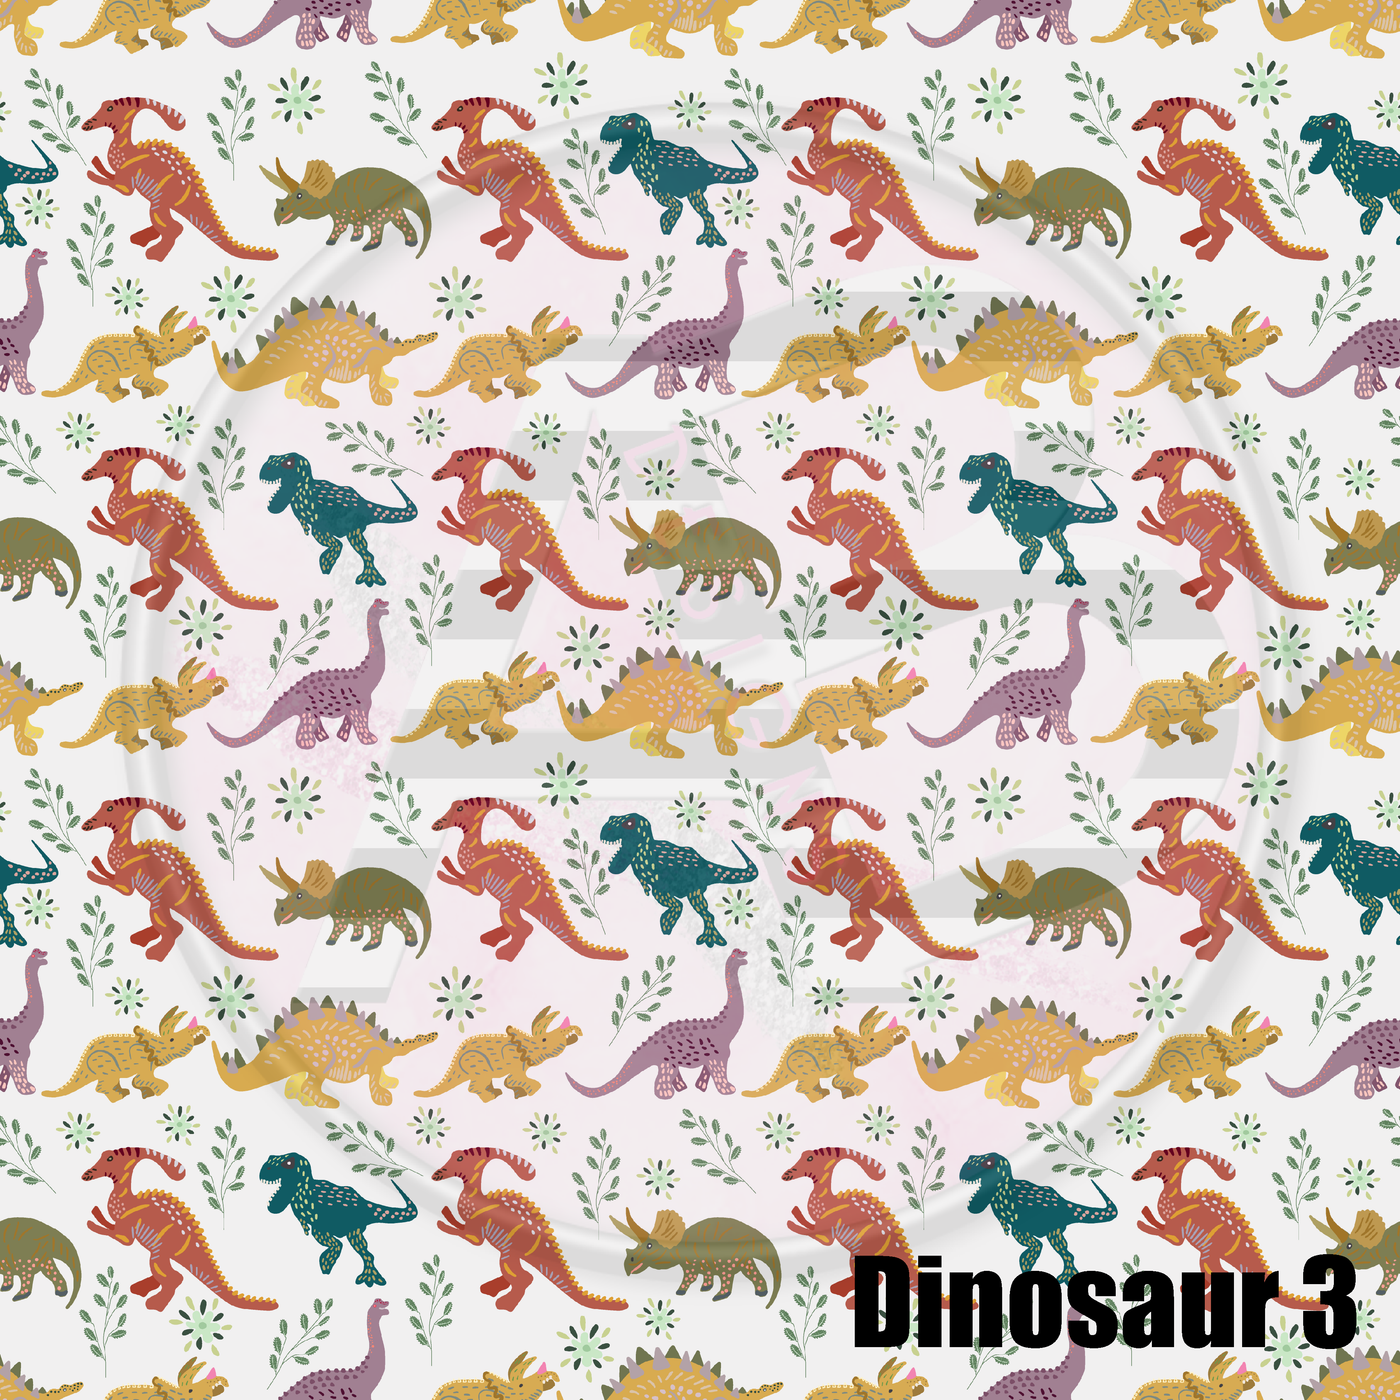 Adhesive Patterned Vinyl - Dinosaur 3